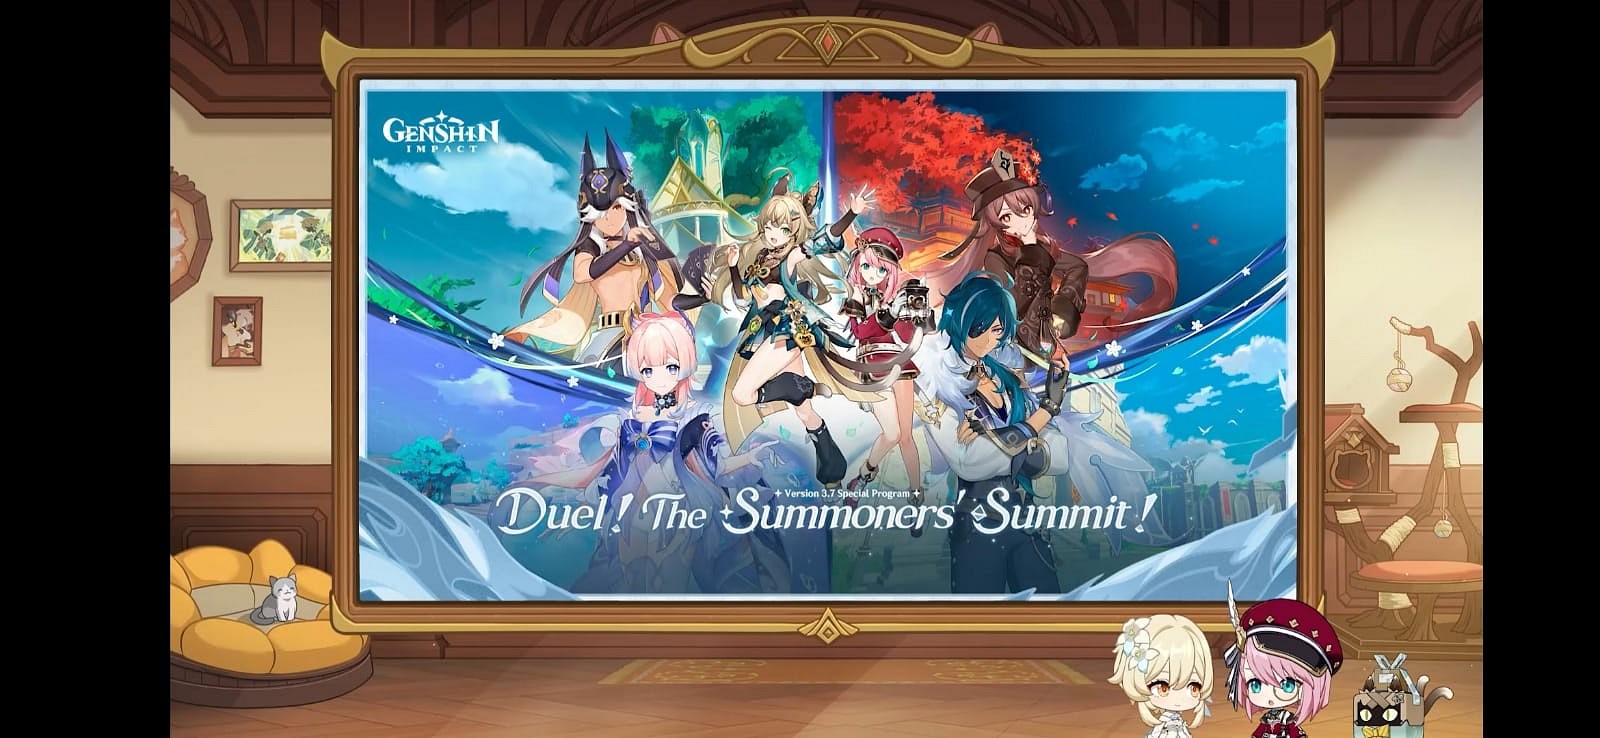 Genshin Impact Version 3.7 Duel! The Summoners' Summit! Twitch